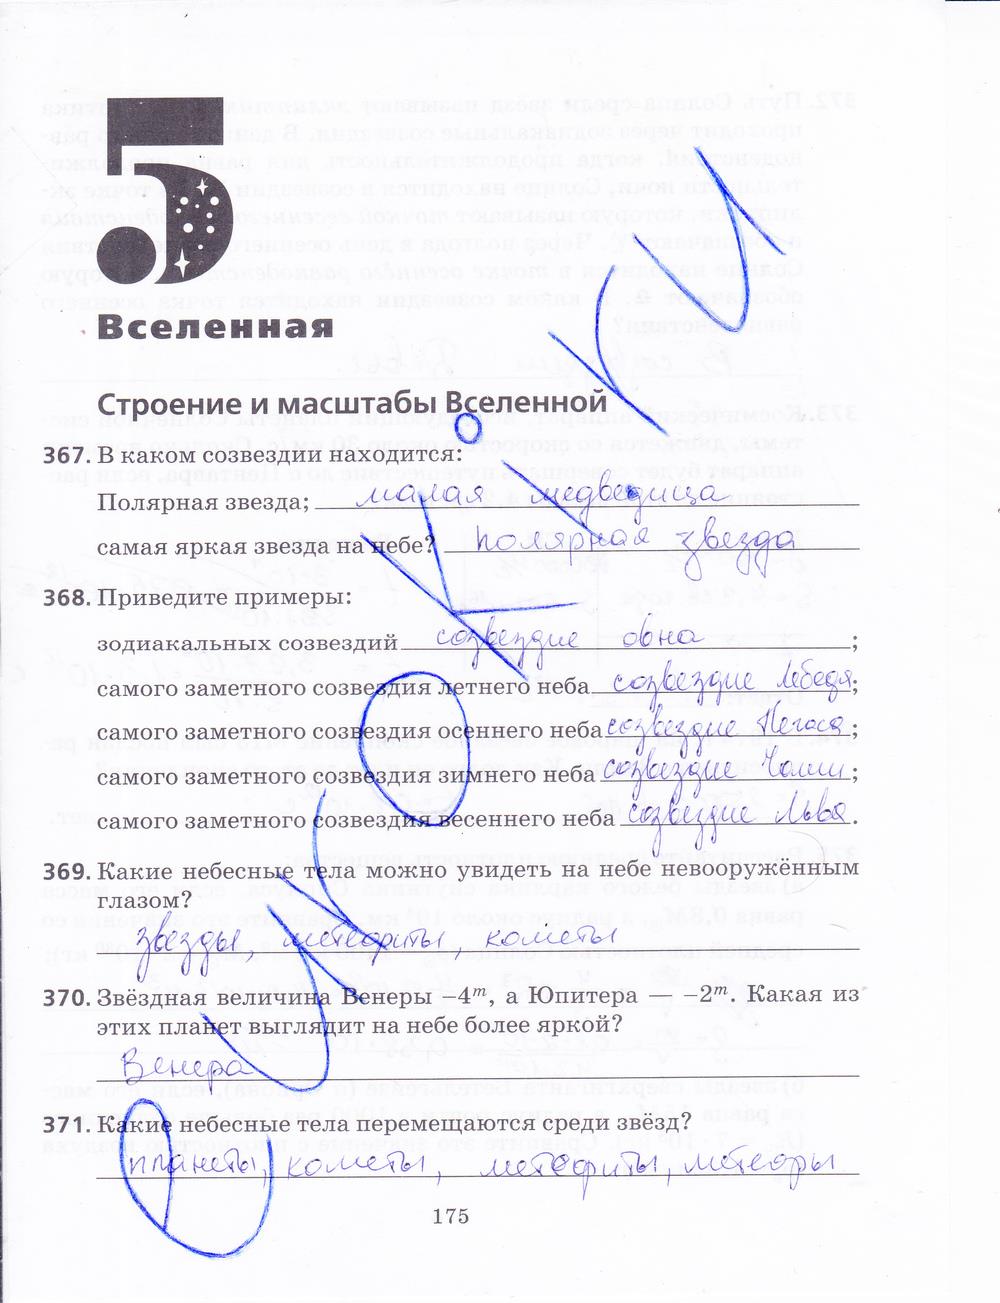 гдз 9 класс рабочая тетрадь страница 175 физика Пурышева, Важеевская, Чаругин